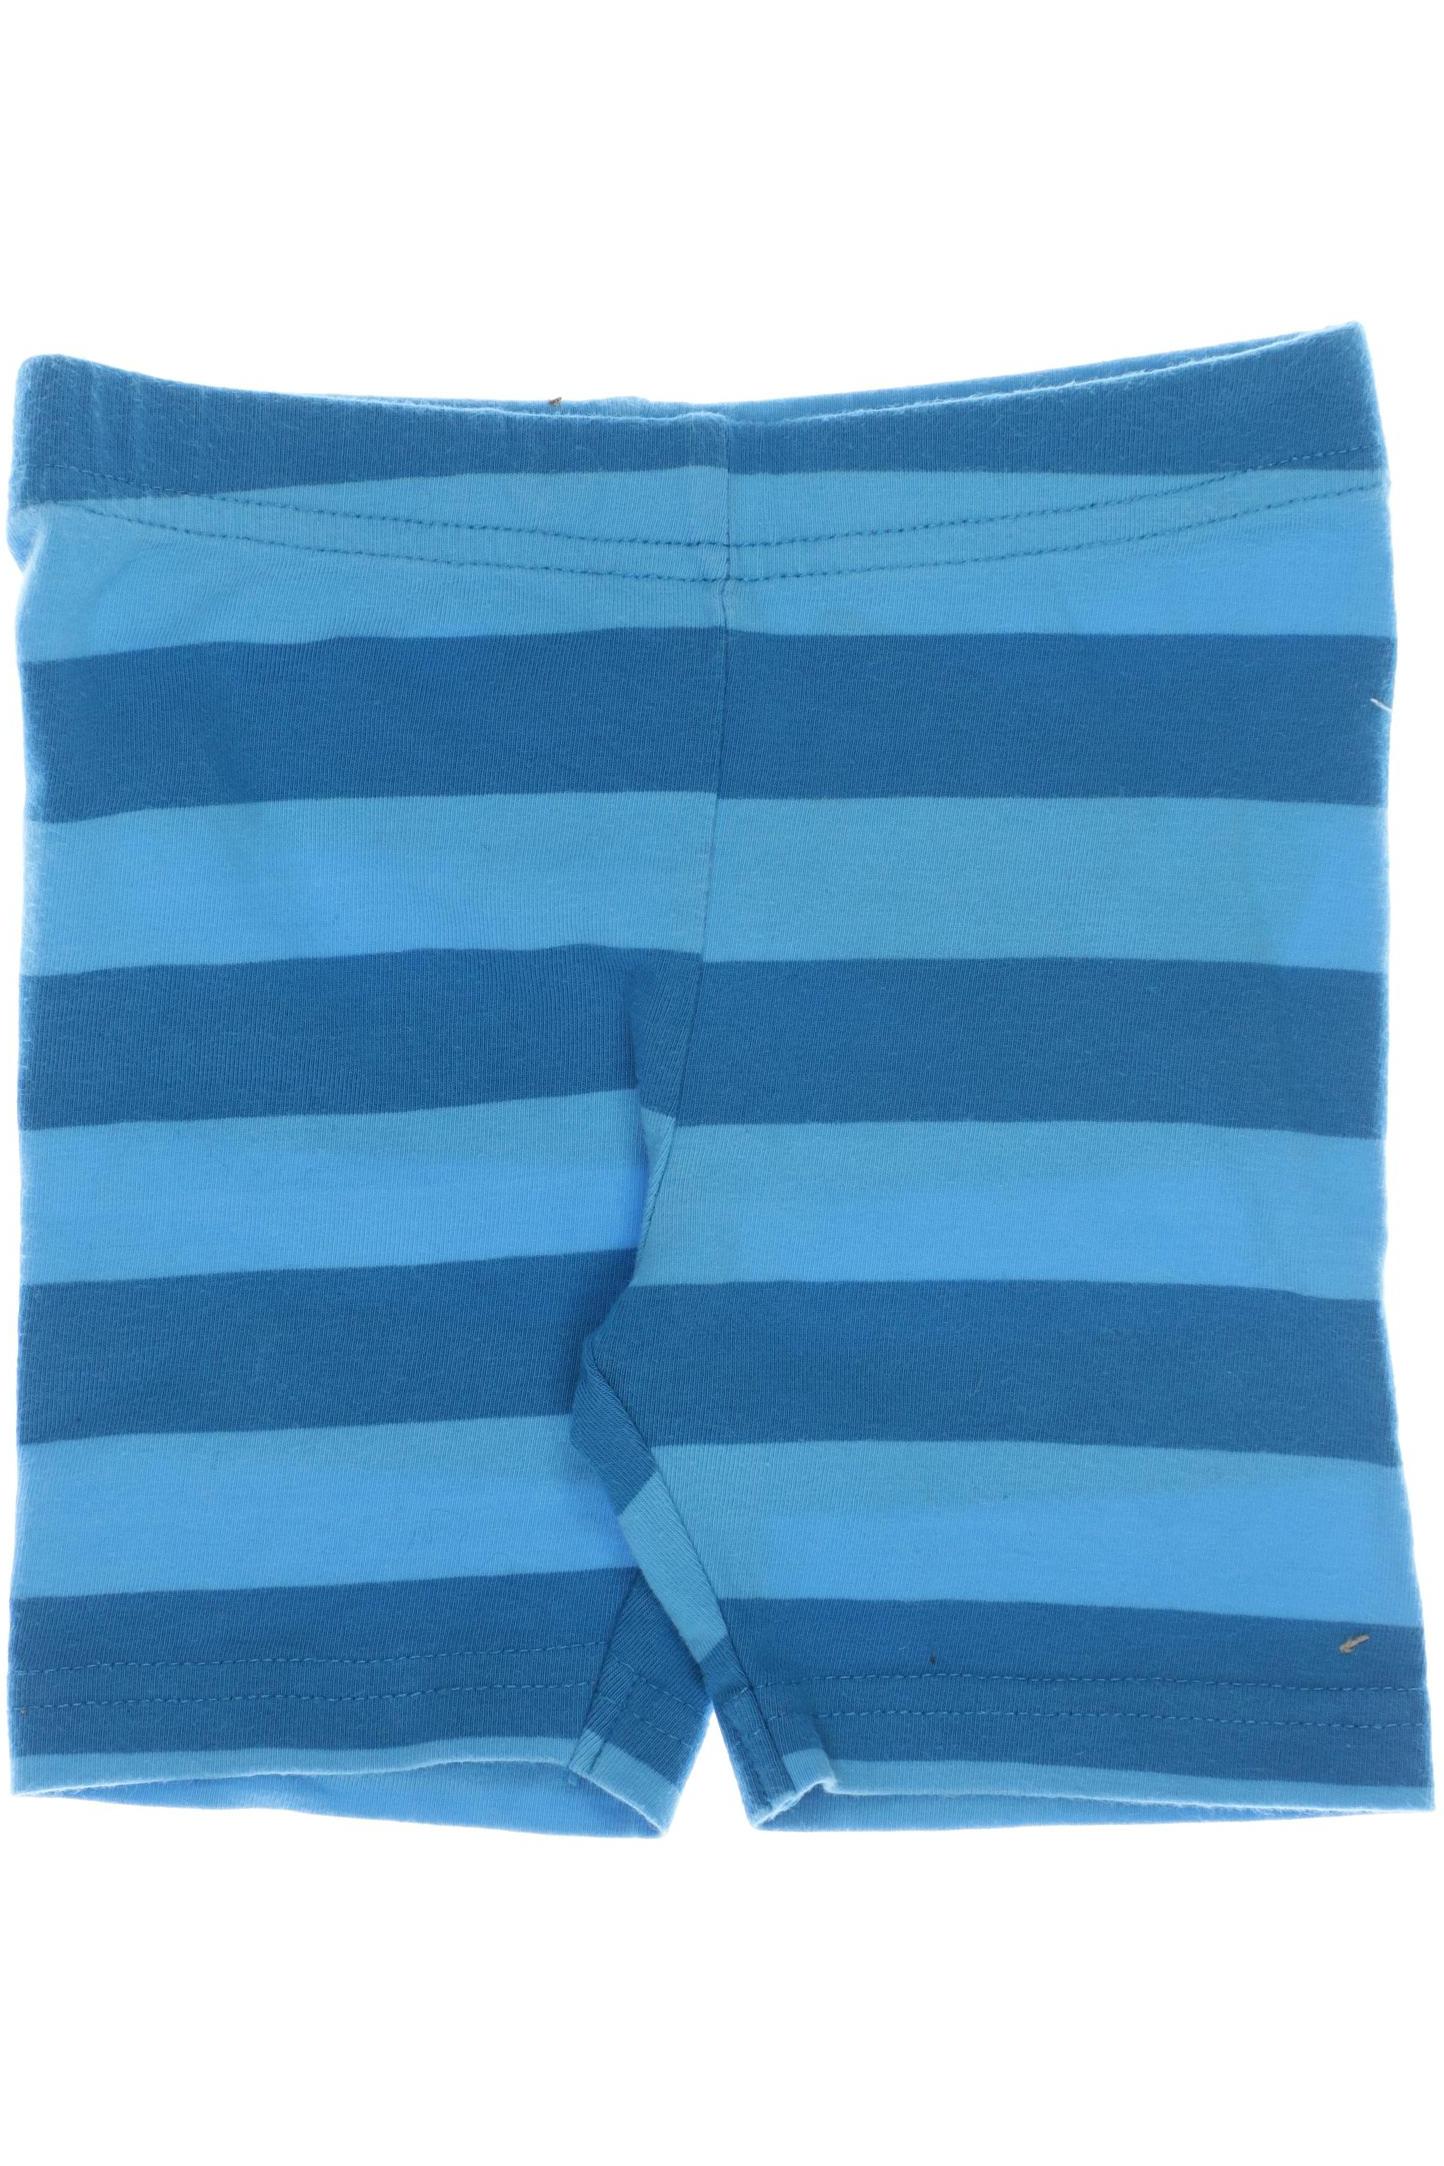 Topomini Herren Shorts, blau, Gr. 68 von Topomini